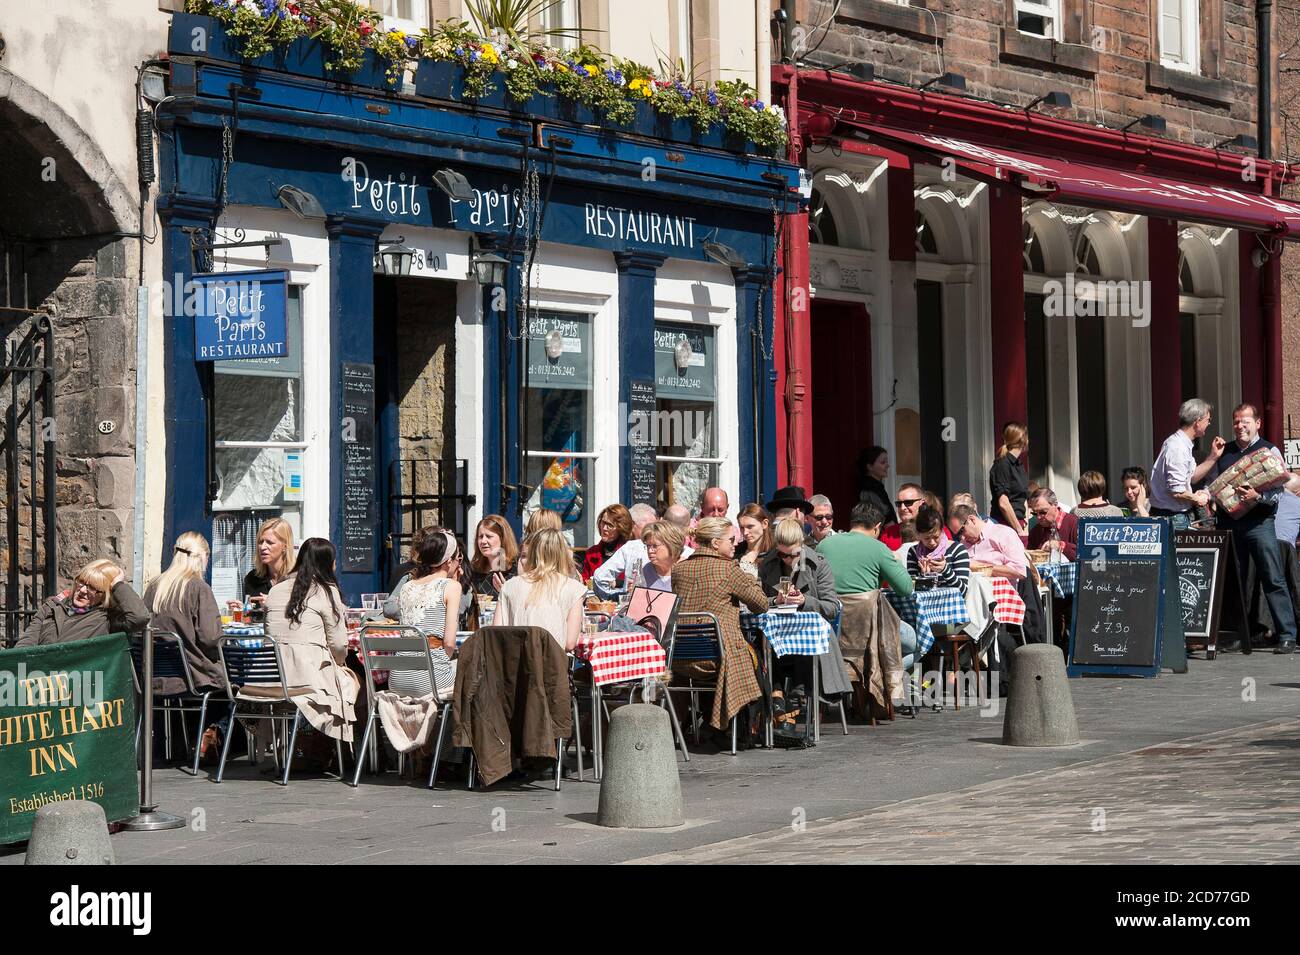 People dining al fresco outside restaurants on a street in the city of Edinburgh, Scotland. Stock Photo